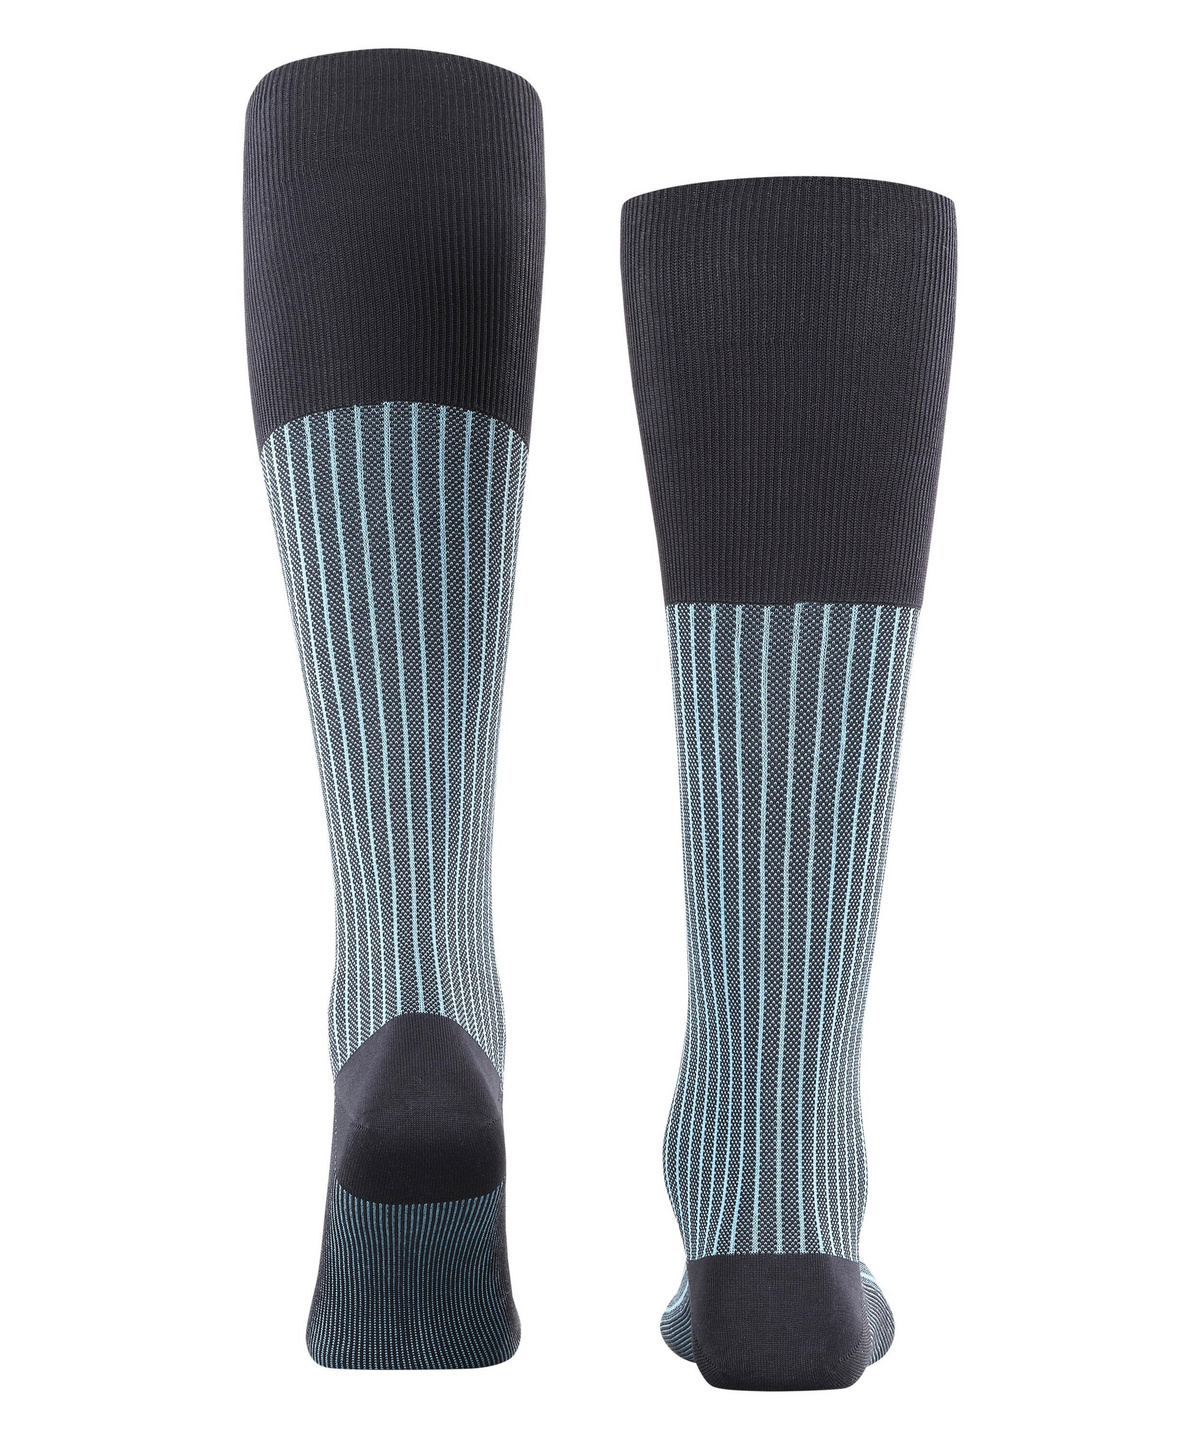 elegant mercerised cotton FALKE Mens Oxford Stripe Knee-High Socks UK sizes 5.5-12.5 EU 39-48 1 Pair Multiple Colours thin Cotton Rich Long colourful 